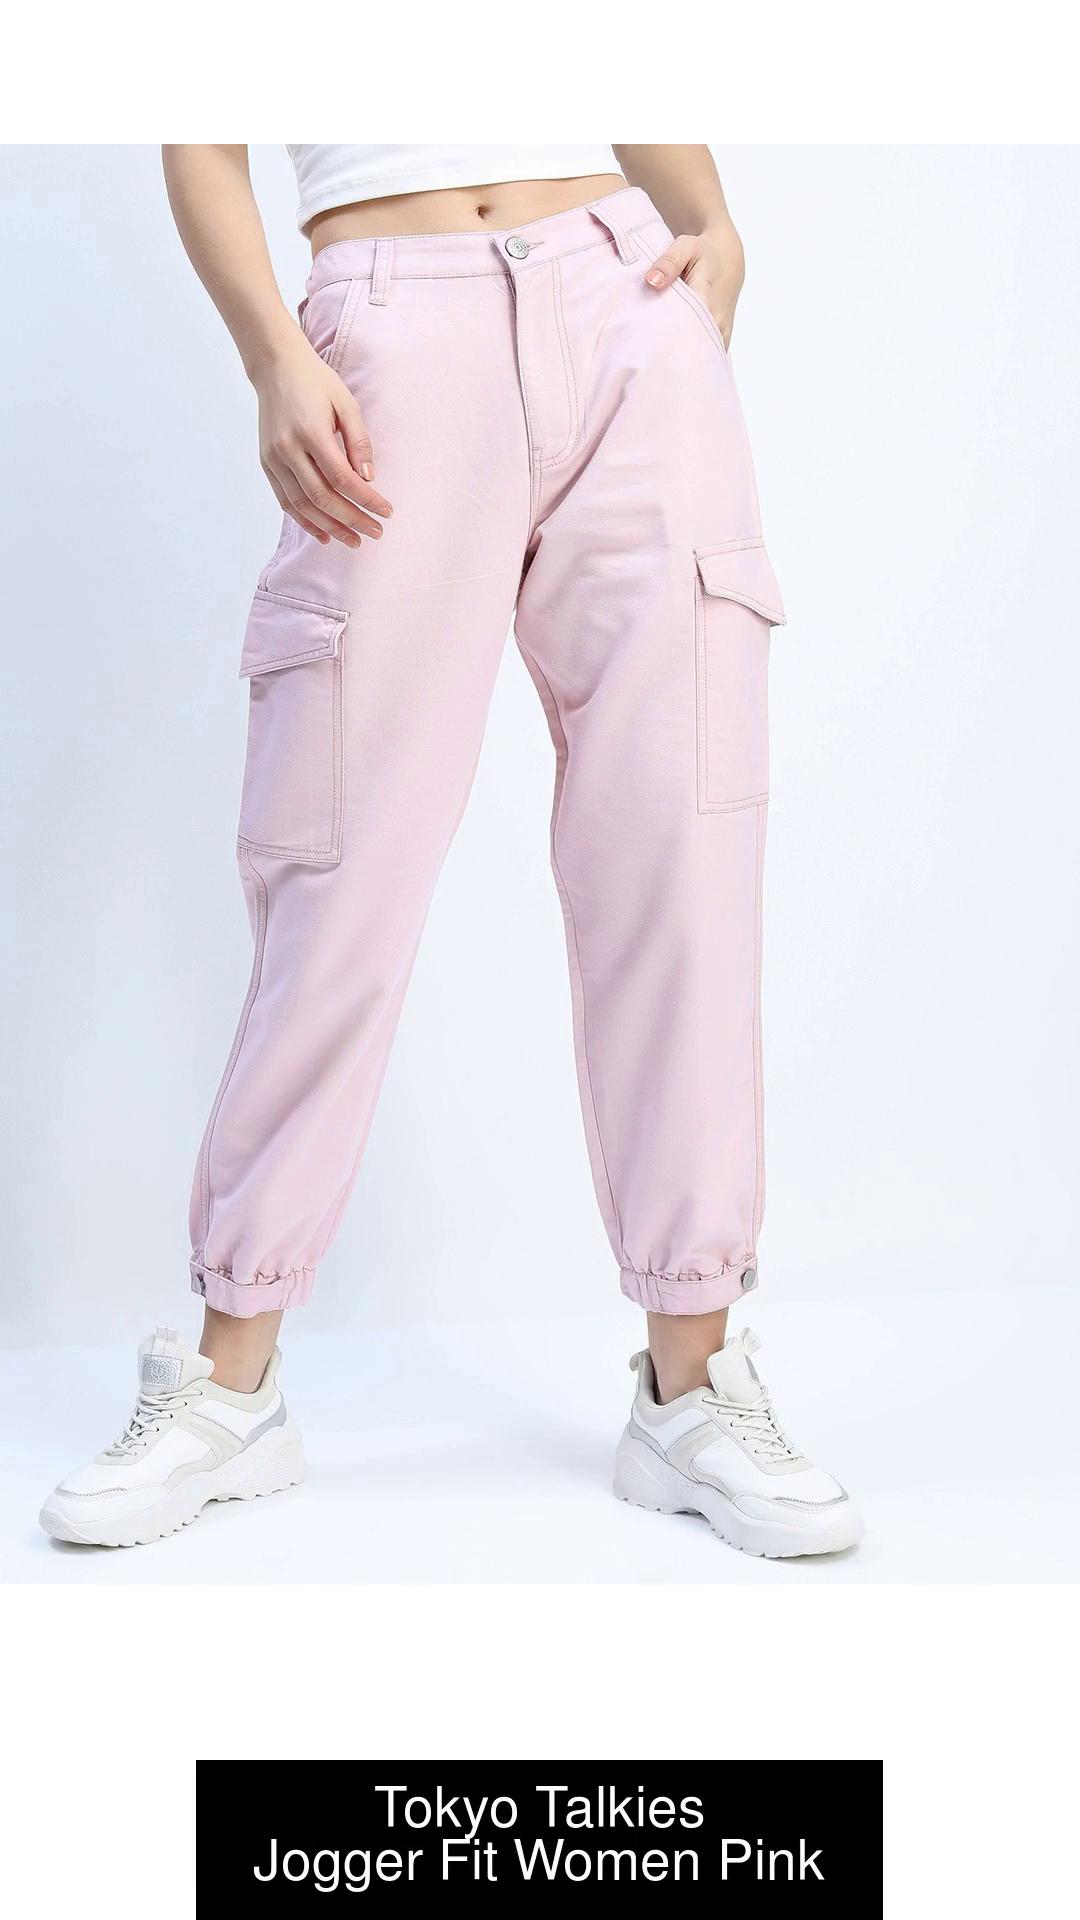 Tokyo Talkies Jogger Fit Women Pink Jeans - Buy Tokyo Talkies